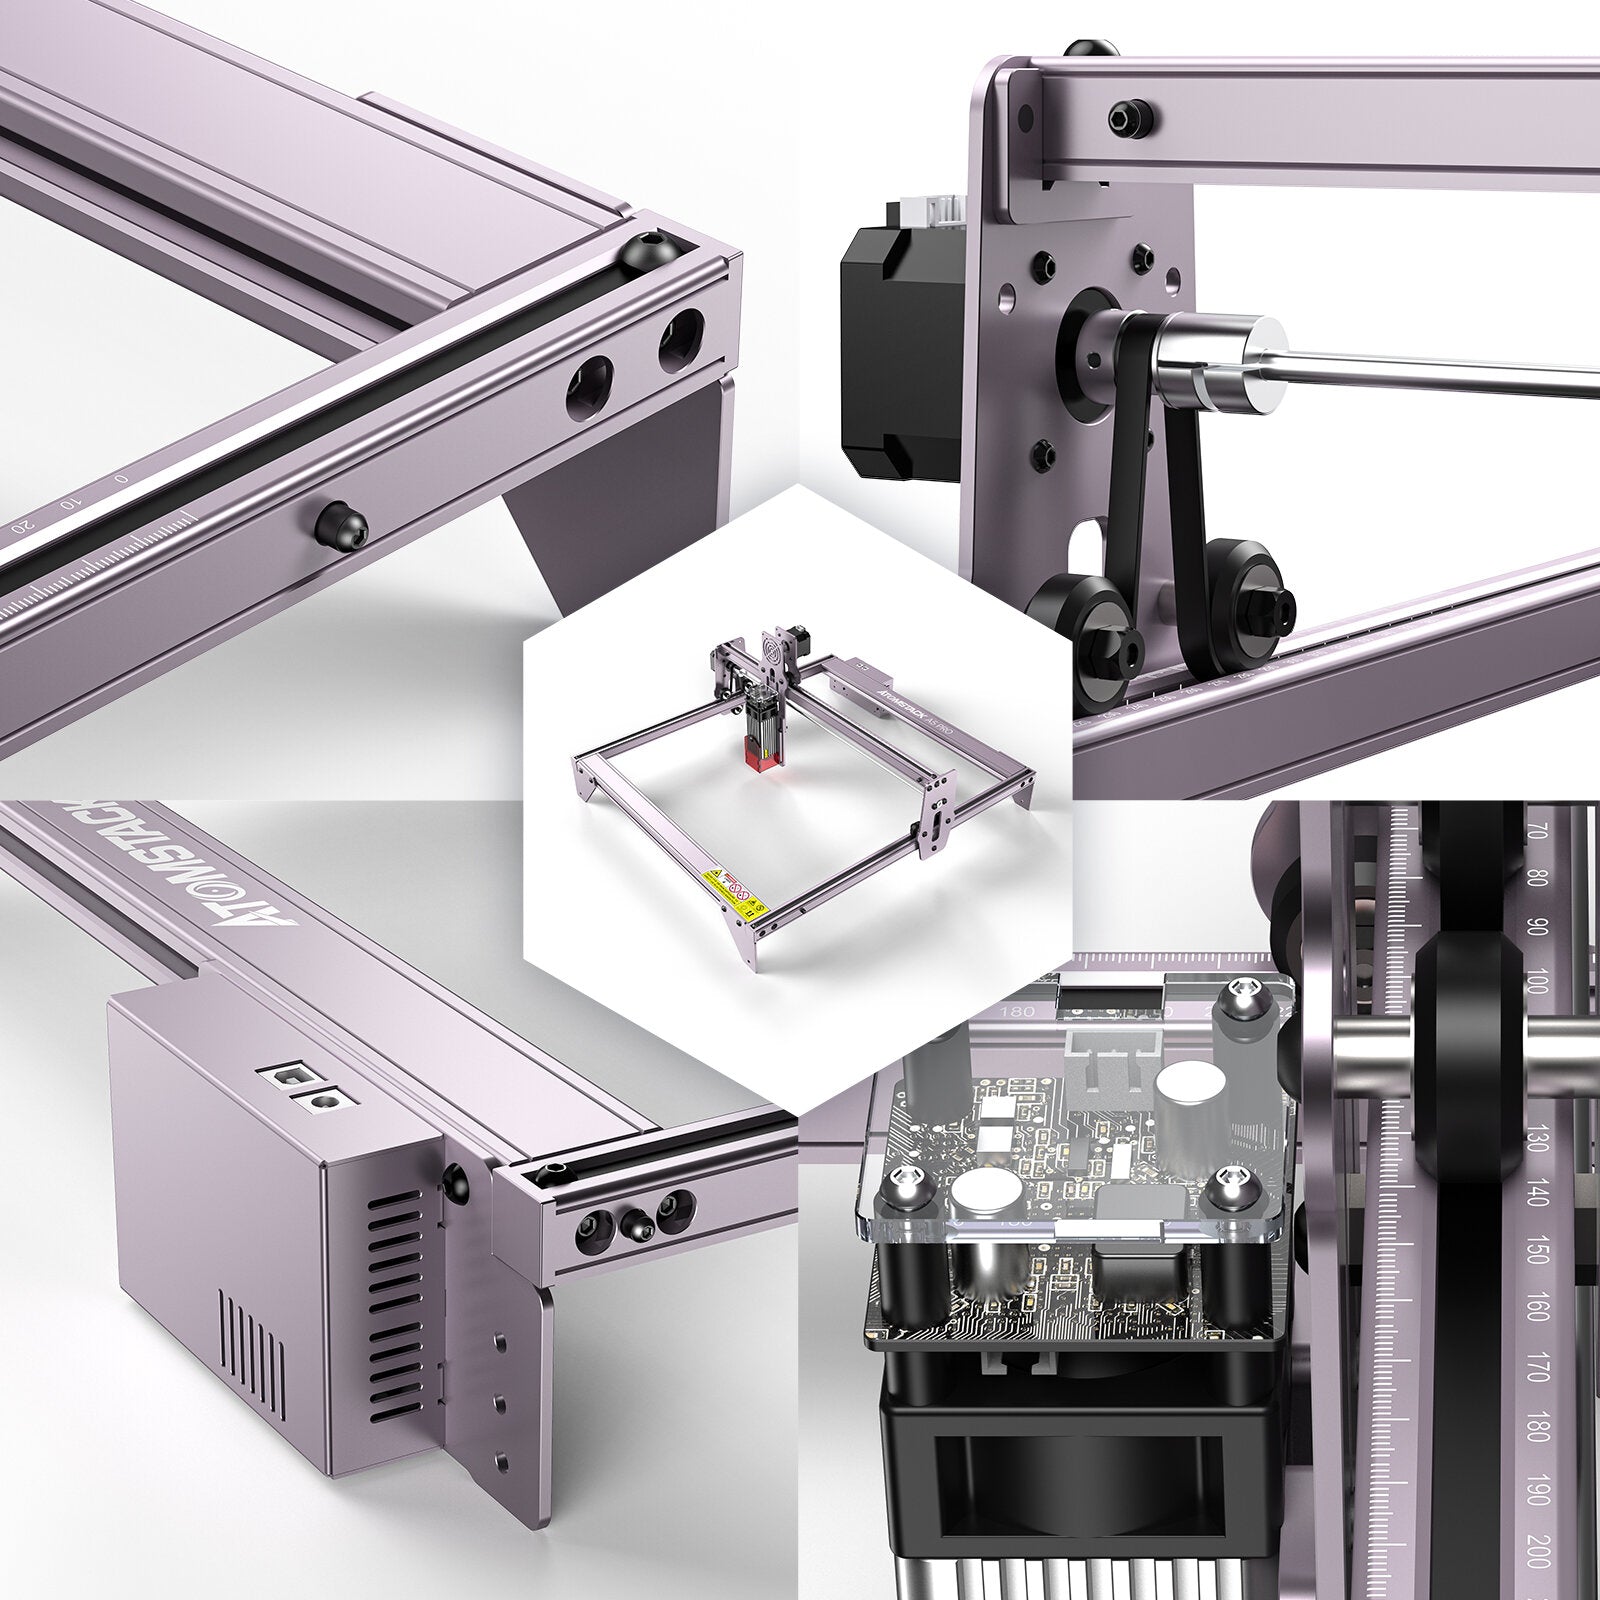 ATOMSTACK A5 PRO 40W Laser Engraving Machine